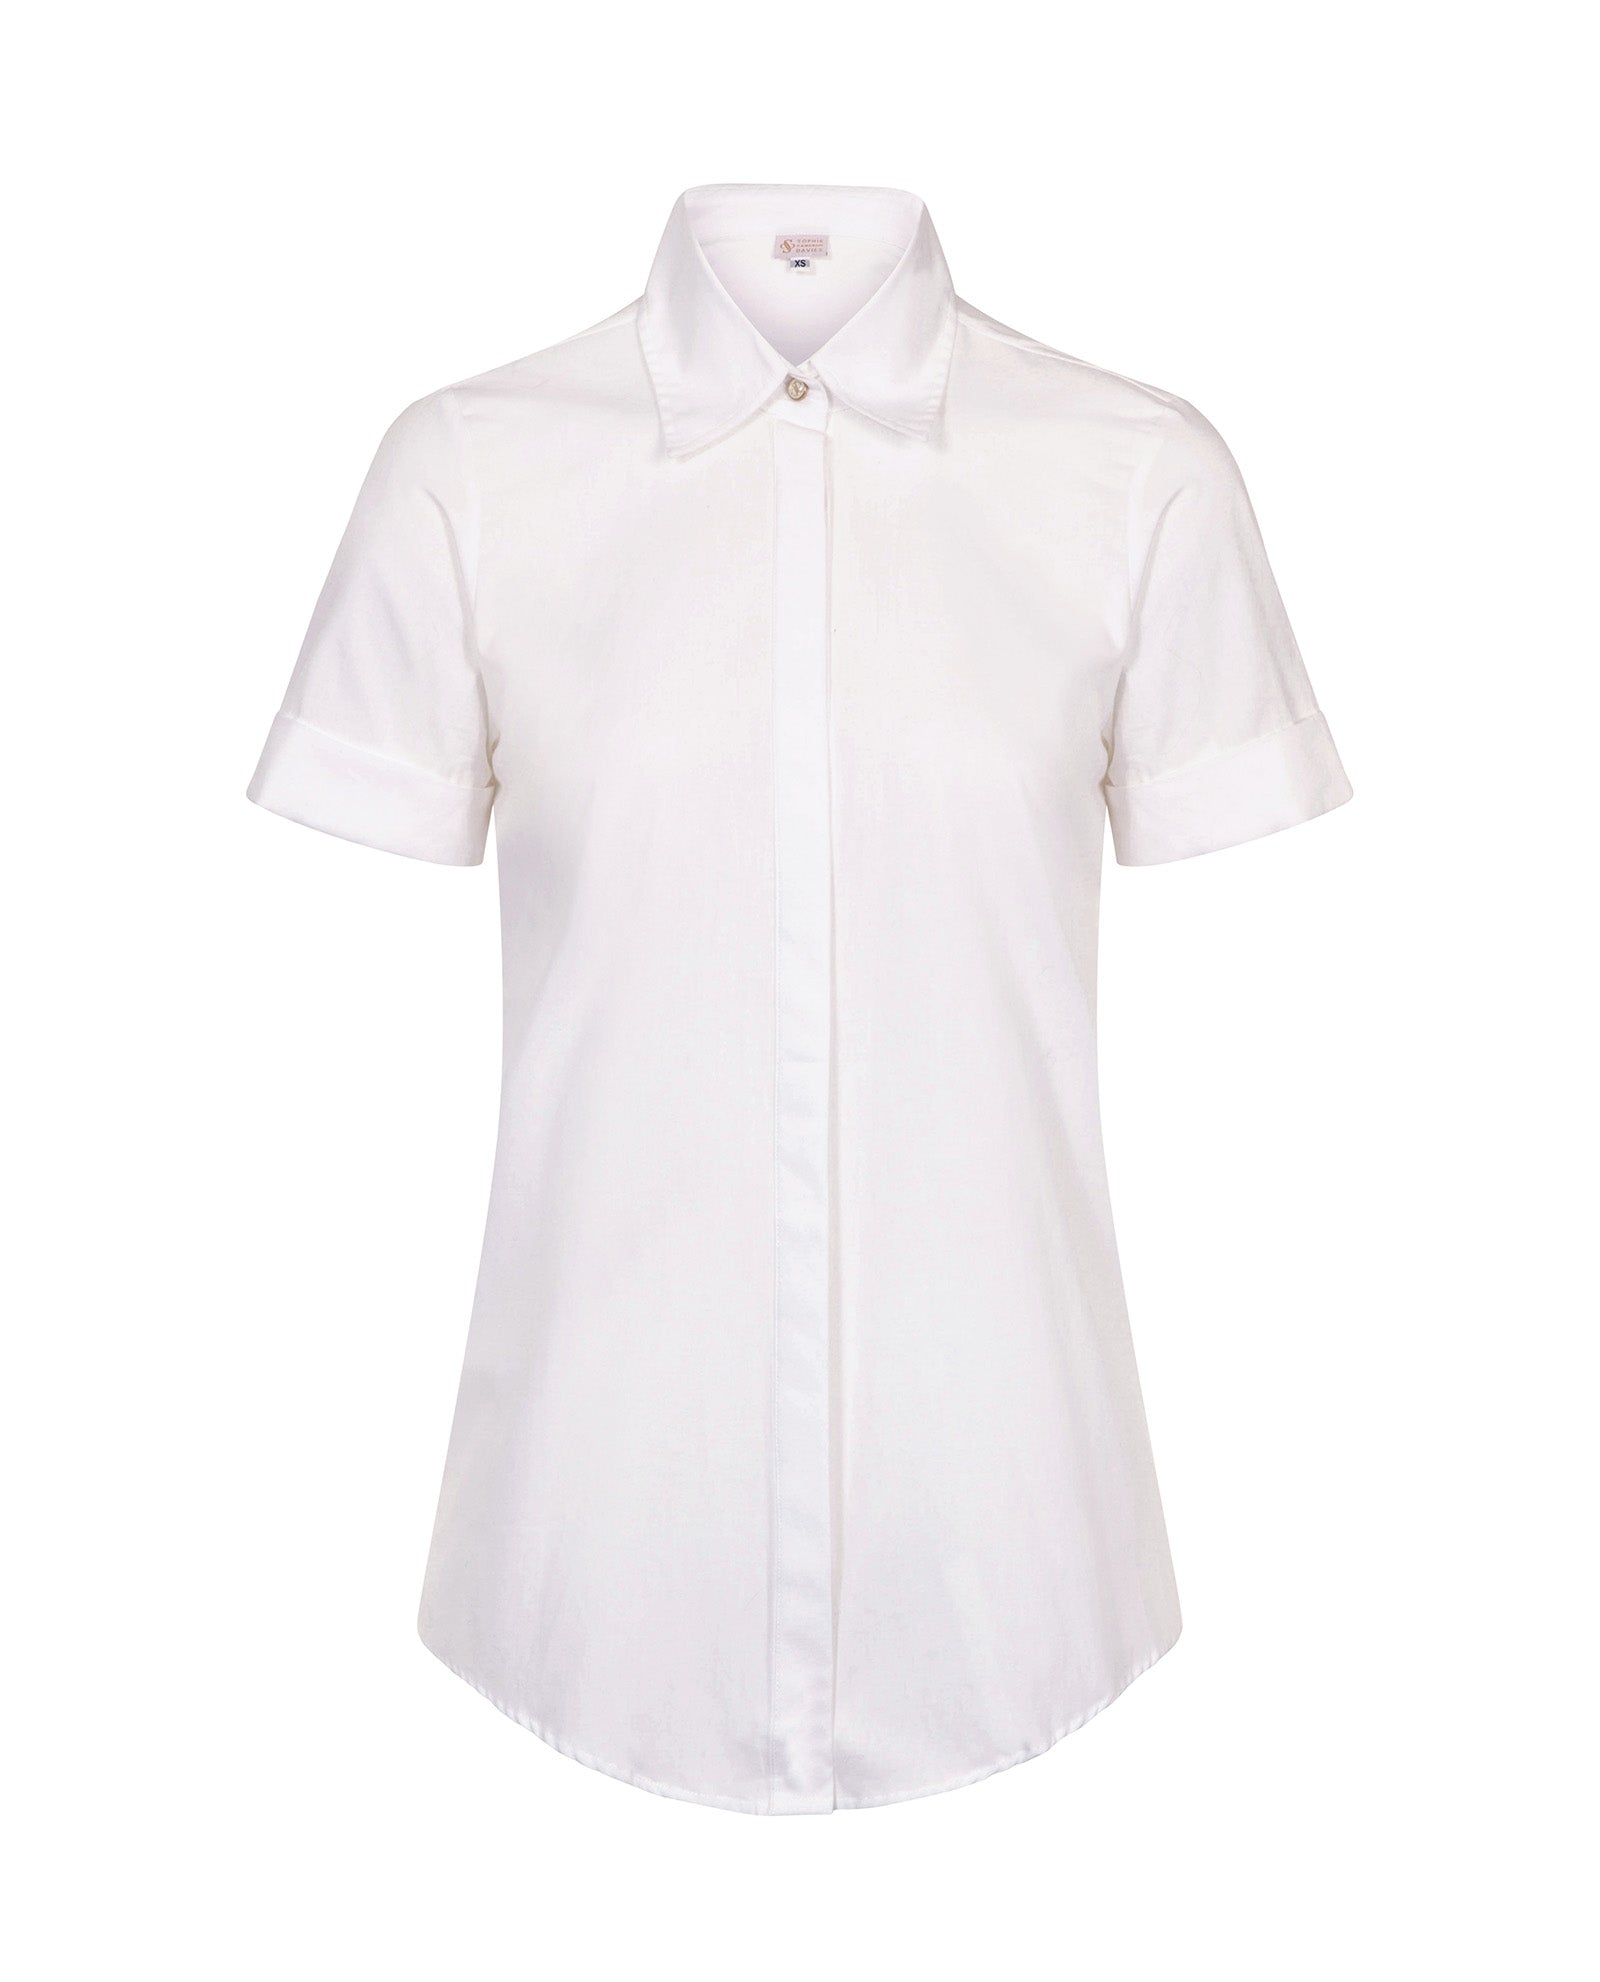 Cotton Classic Shirt White